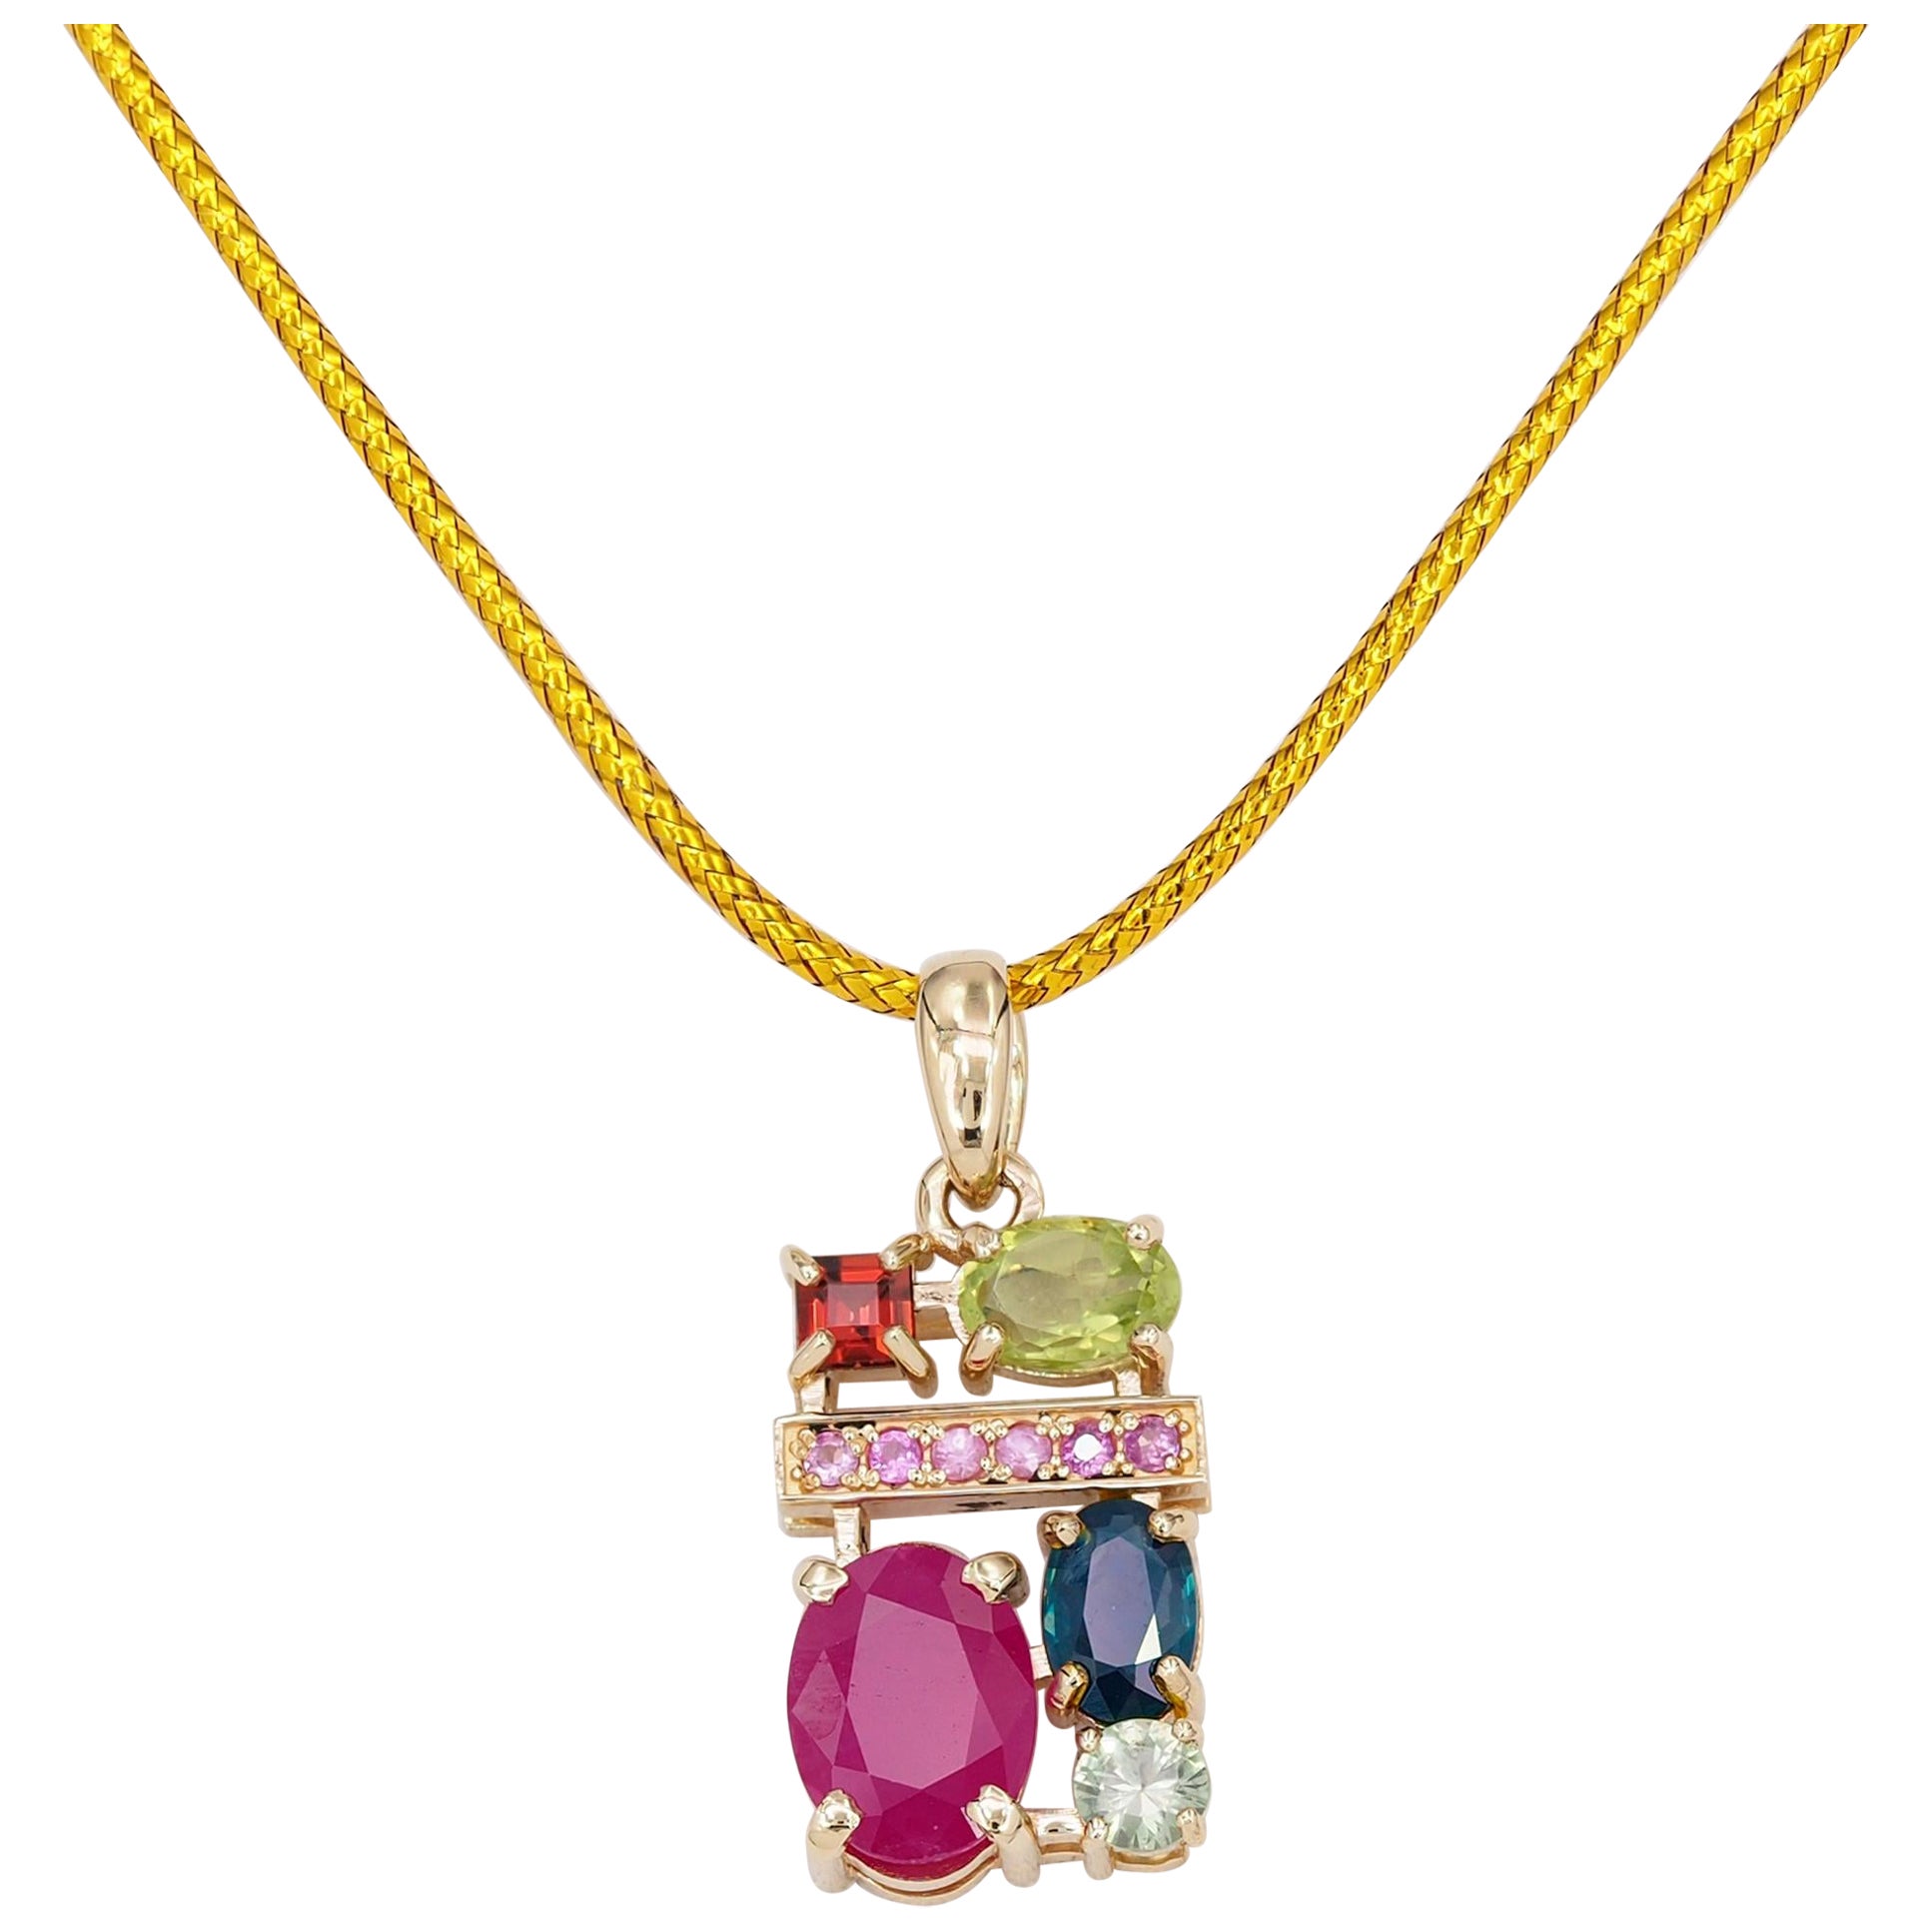 Ruby, sapphire, peridot, tourmaline, garnet and side pink sapphires pendant